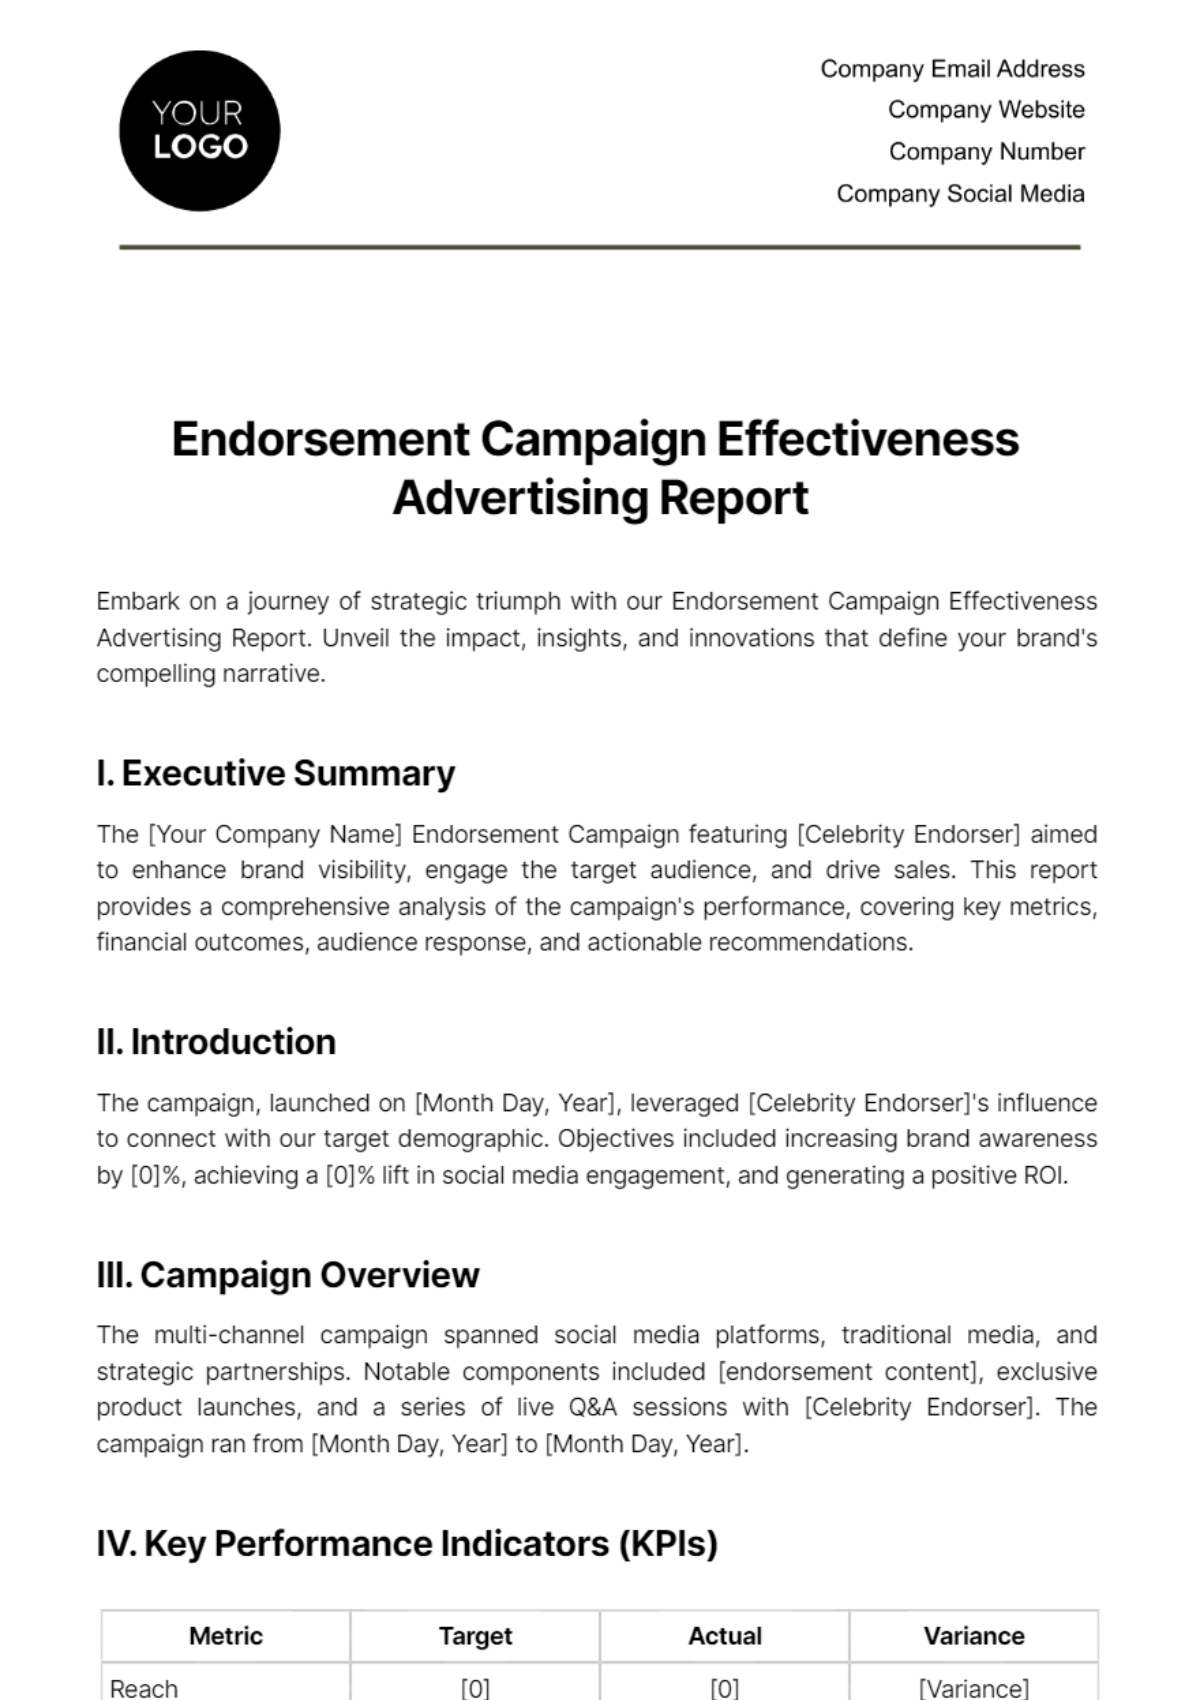 Endorsement Campaign Effectiveness Advertising Report Template 